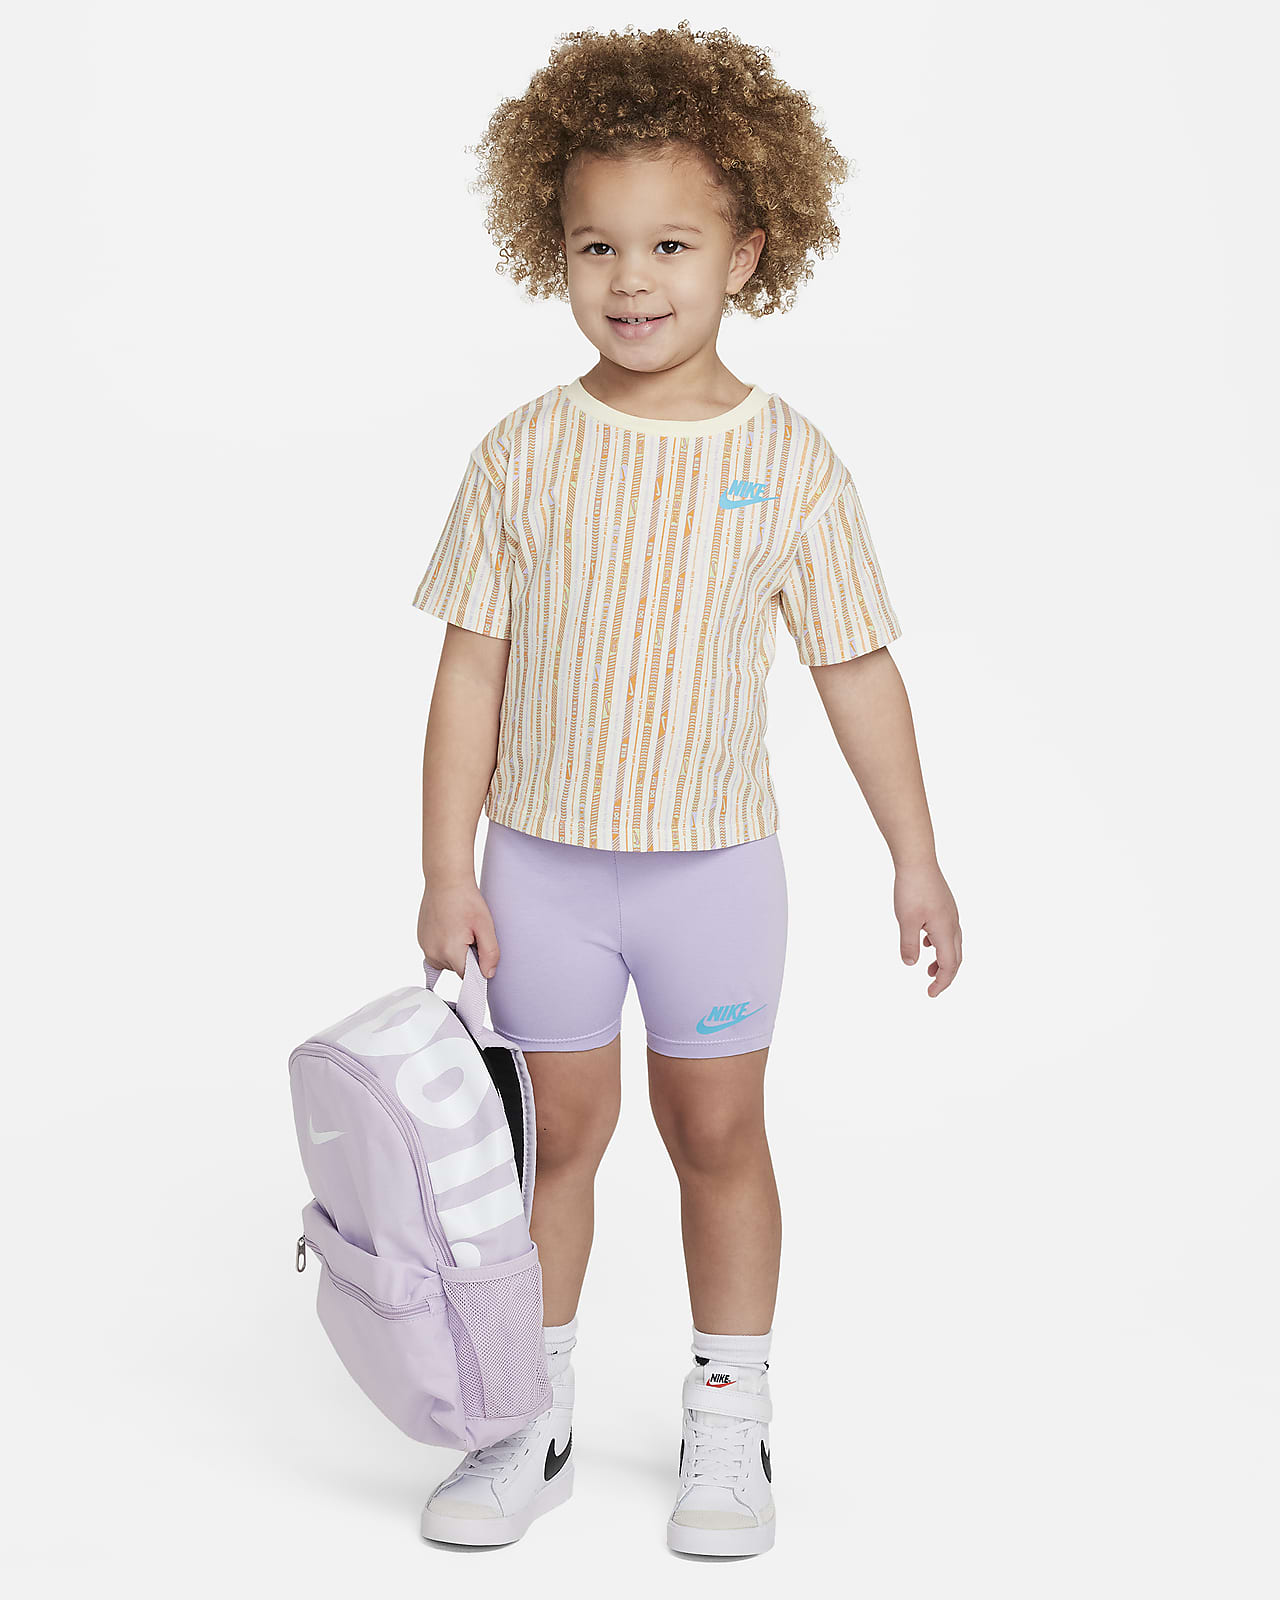 Nike Happy Camper Toddler Bike Shorts Set